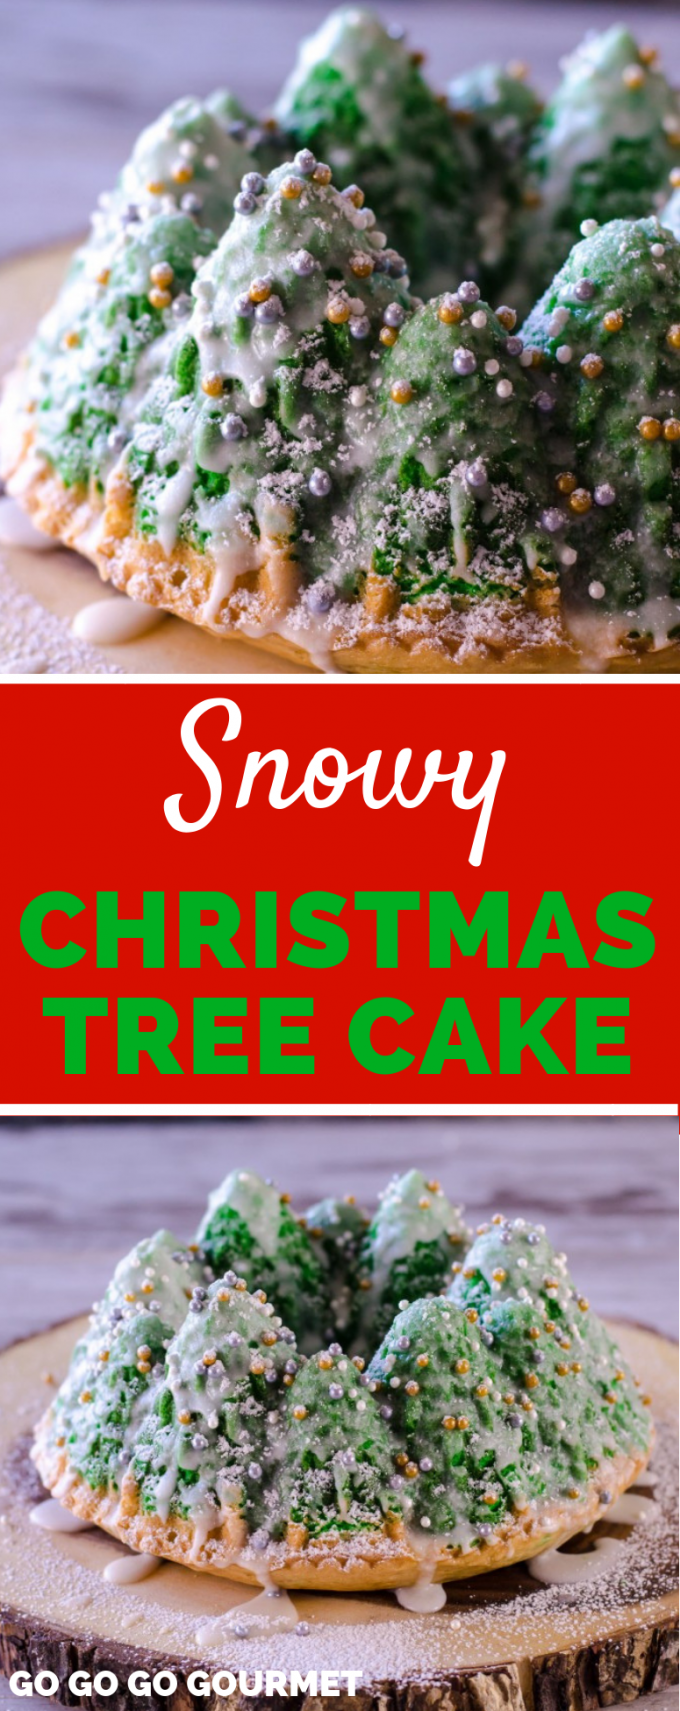 https://www.gogogogourmet.com/wp-content/uploads/2016/12/Snowy-Christmas-Tree-Cake.png